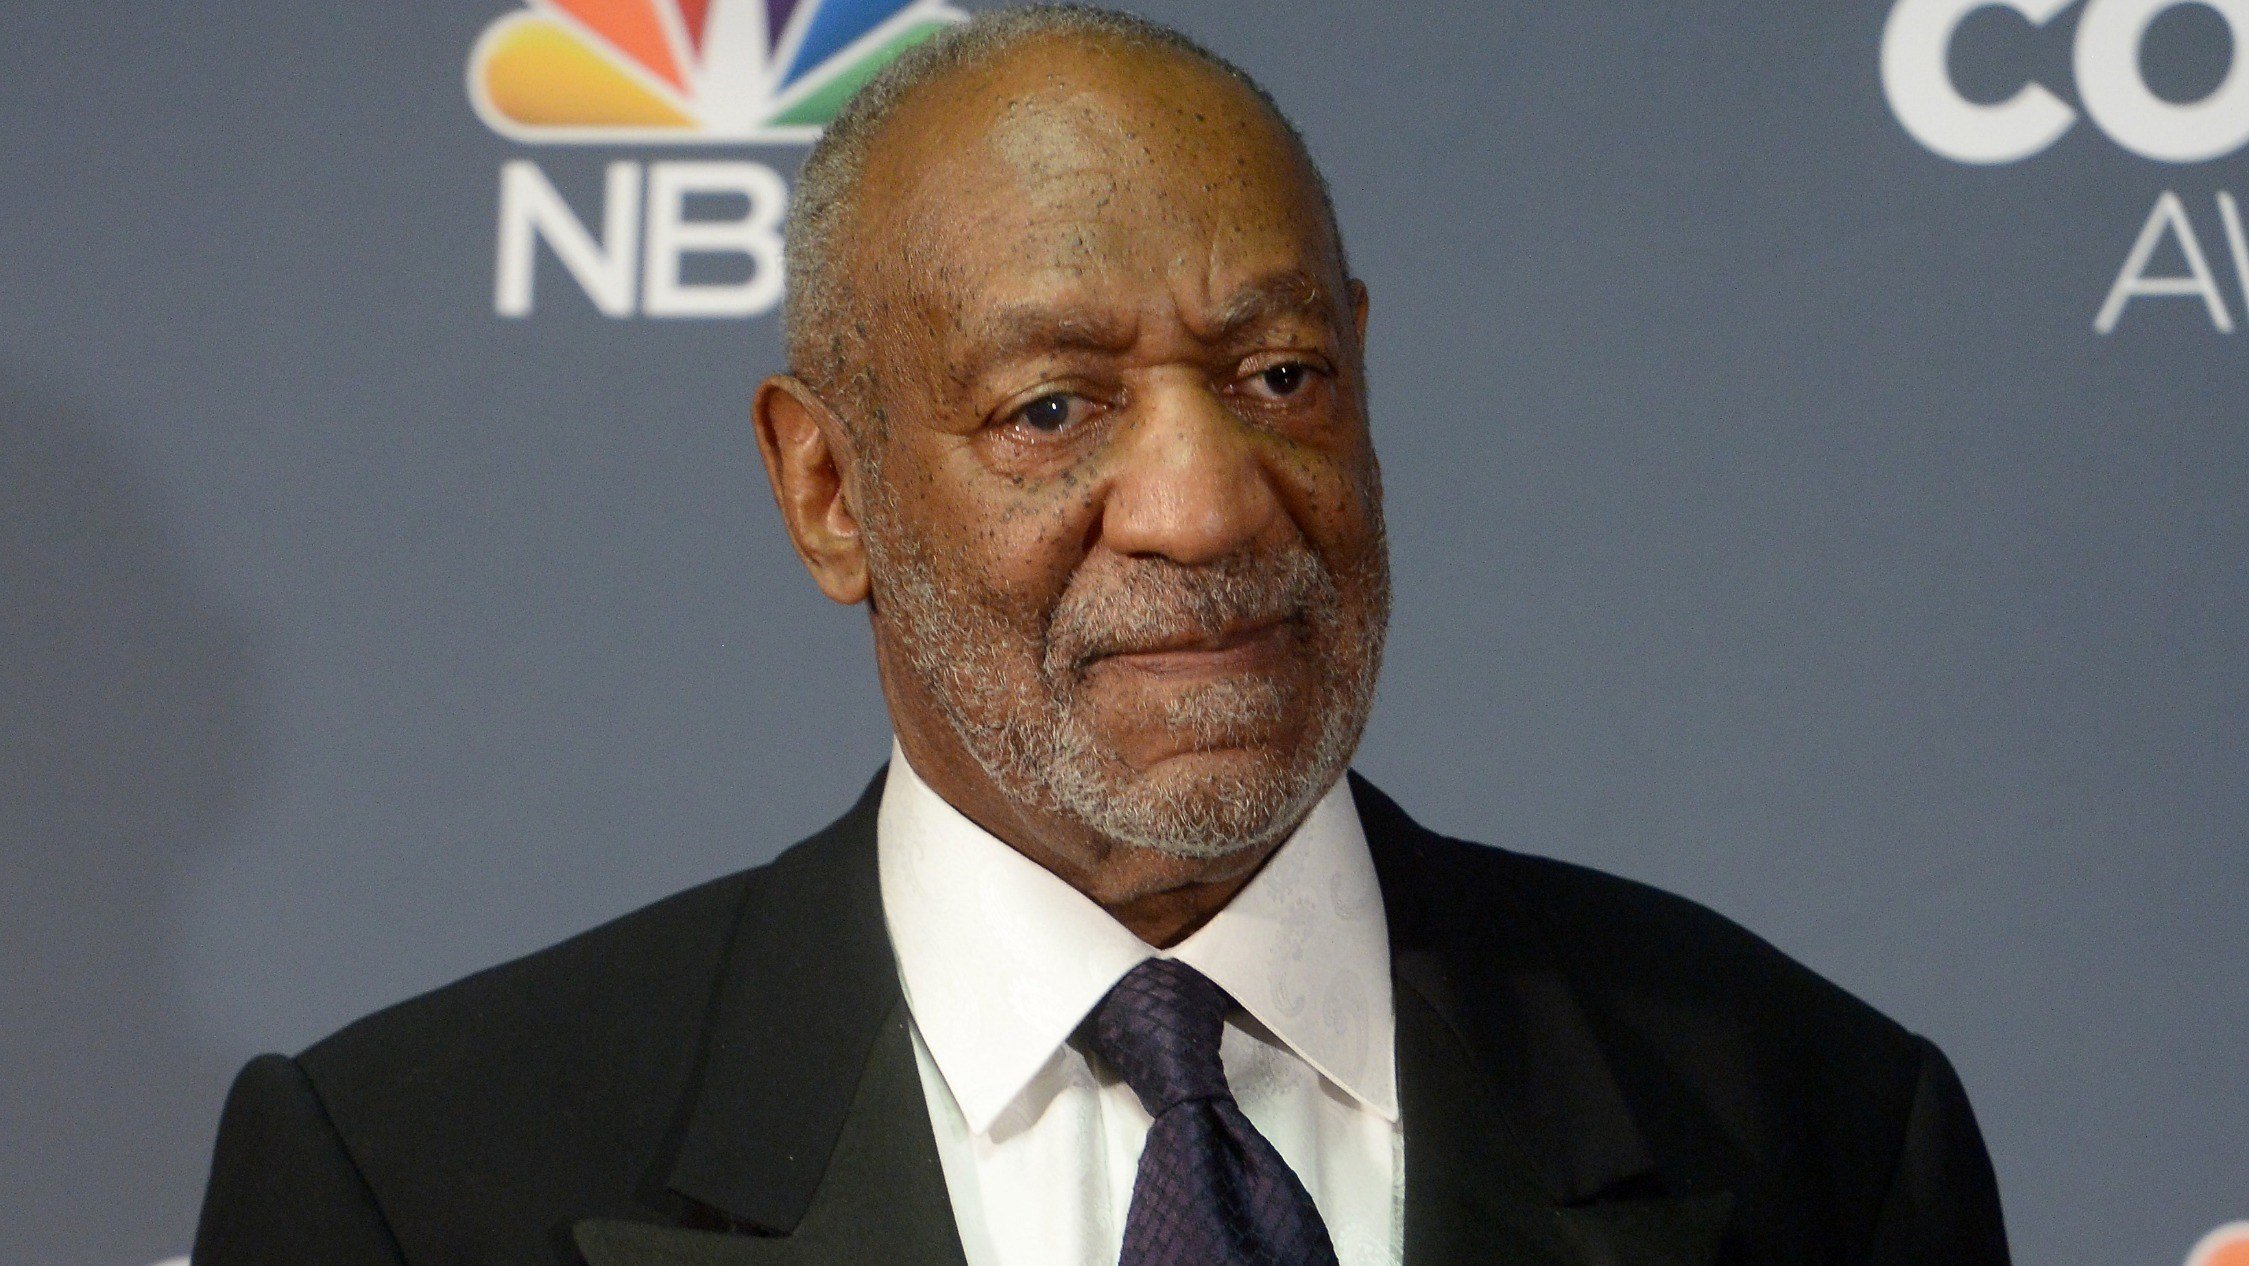 Northwestern University revokes Bill Cosby's honorary degree